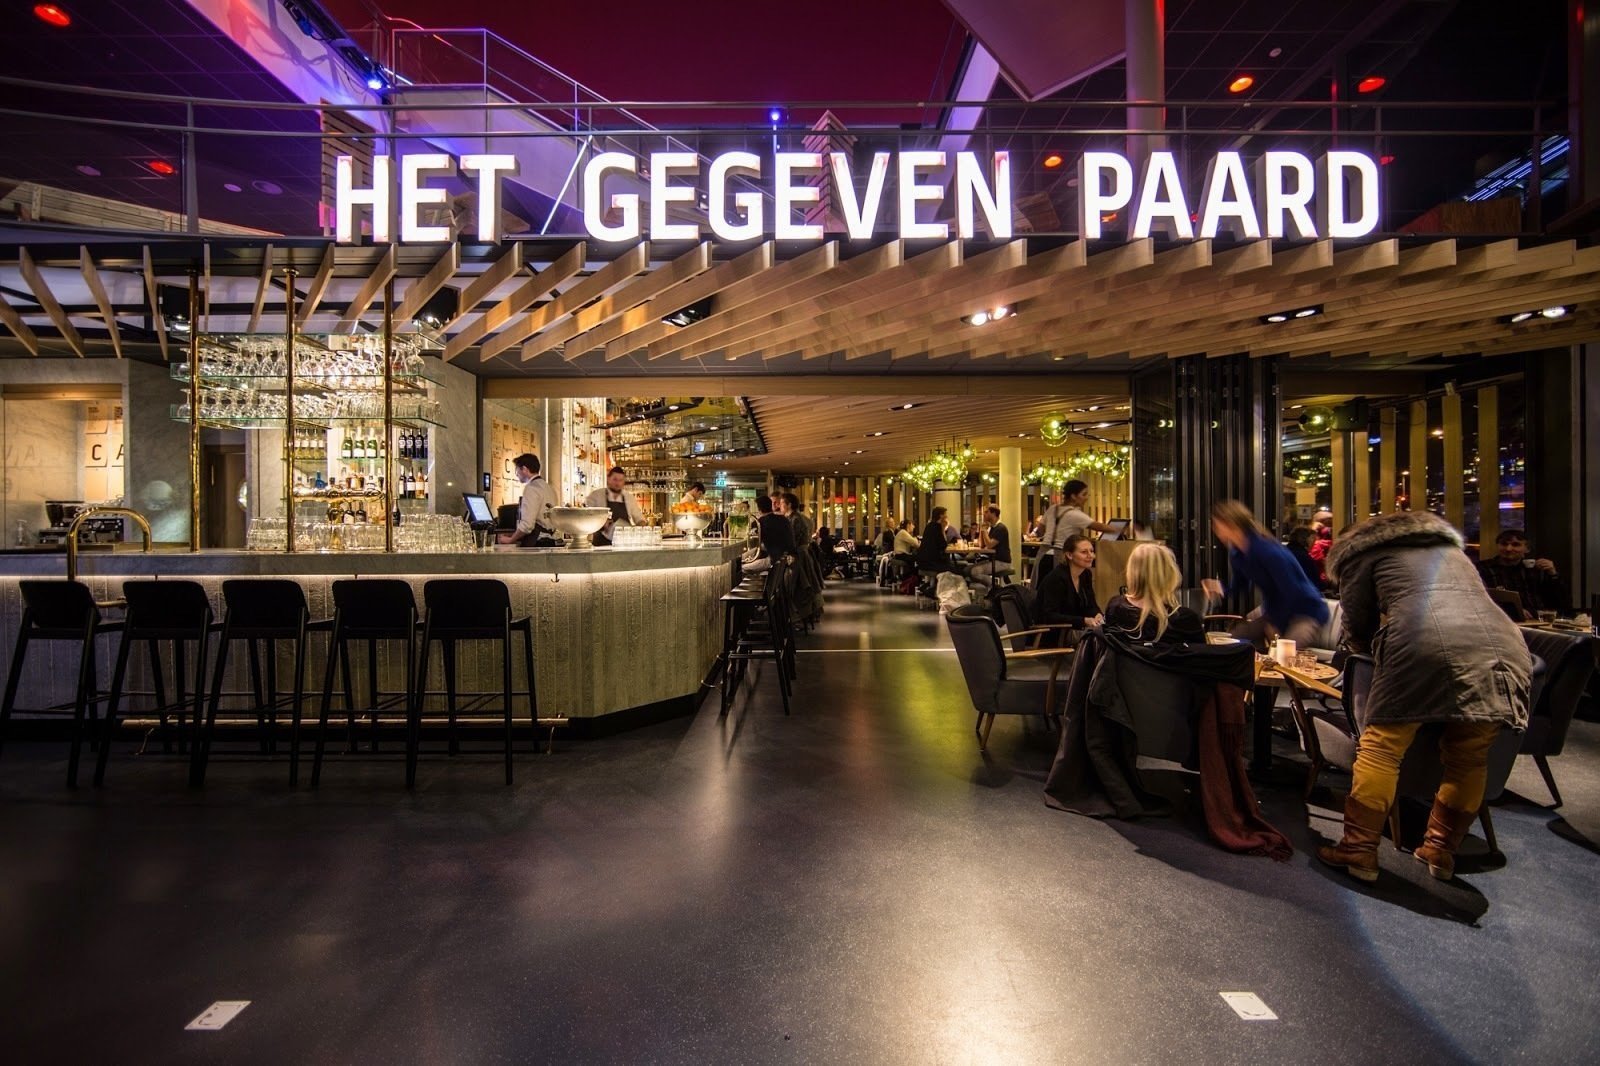 <span class="translation_missing" title="translation missing: en.meta.location_title, location_name: Café Het Gegeven Paard, city: Utrecht">Location Title</span>